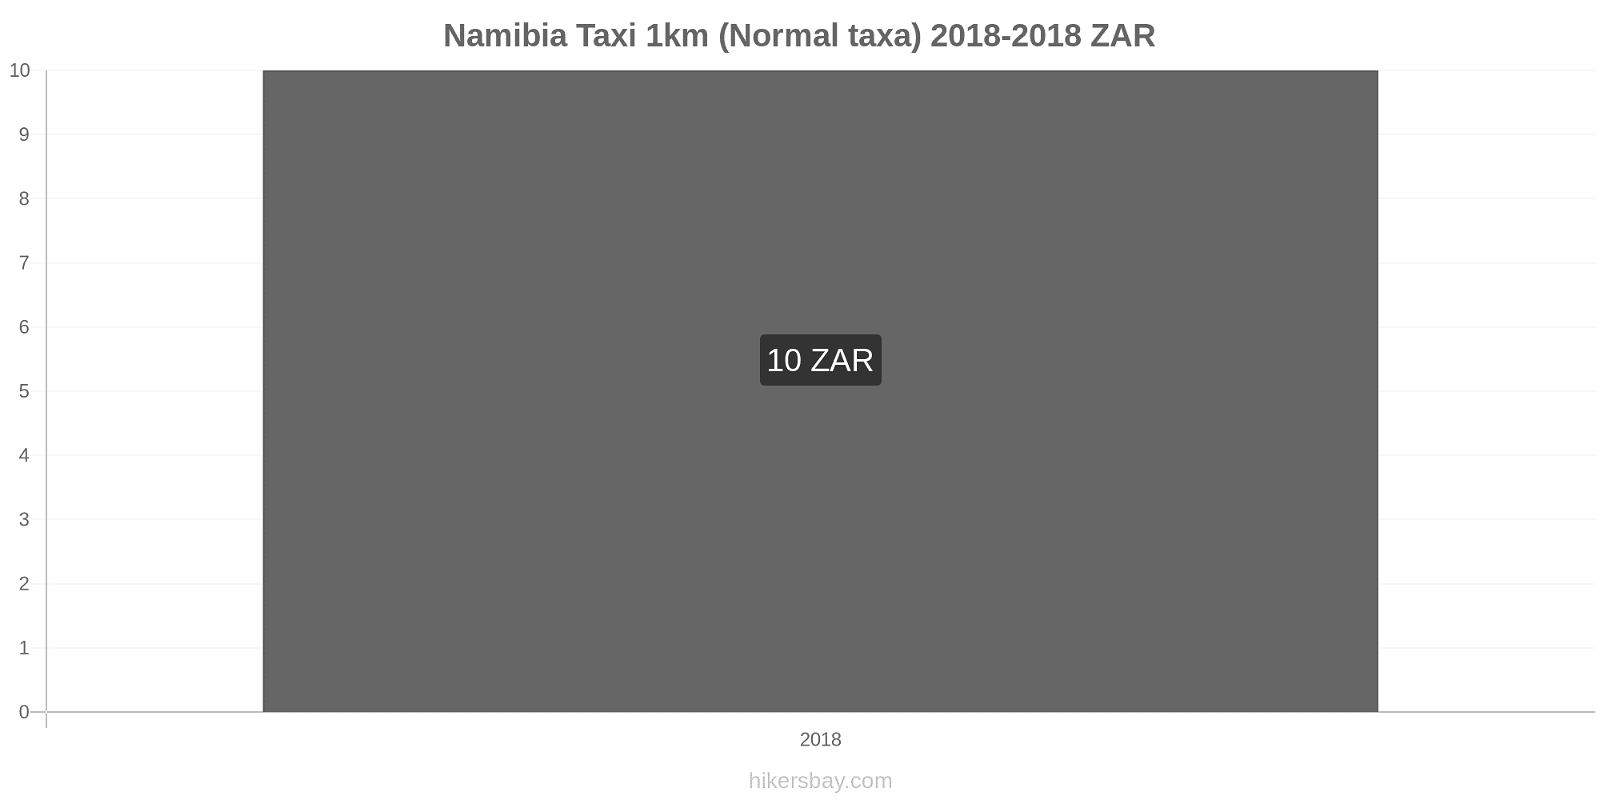 Namibia prisändringar Taxi 1km (Normal taxa) hikersbay.com